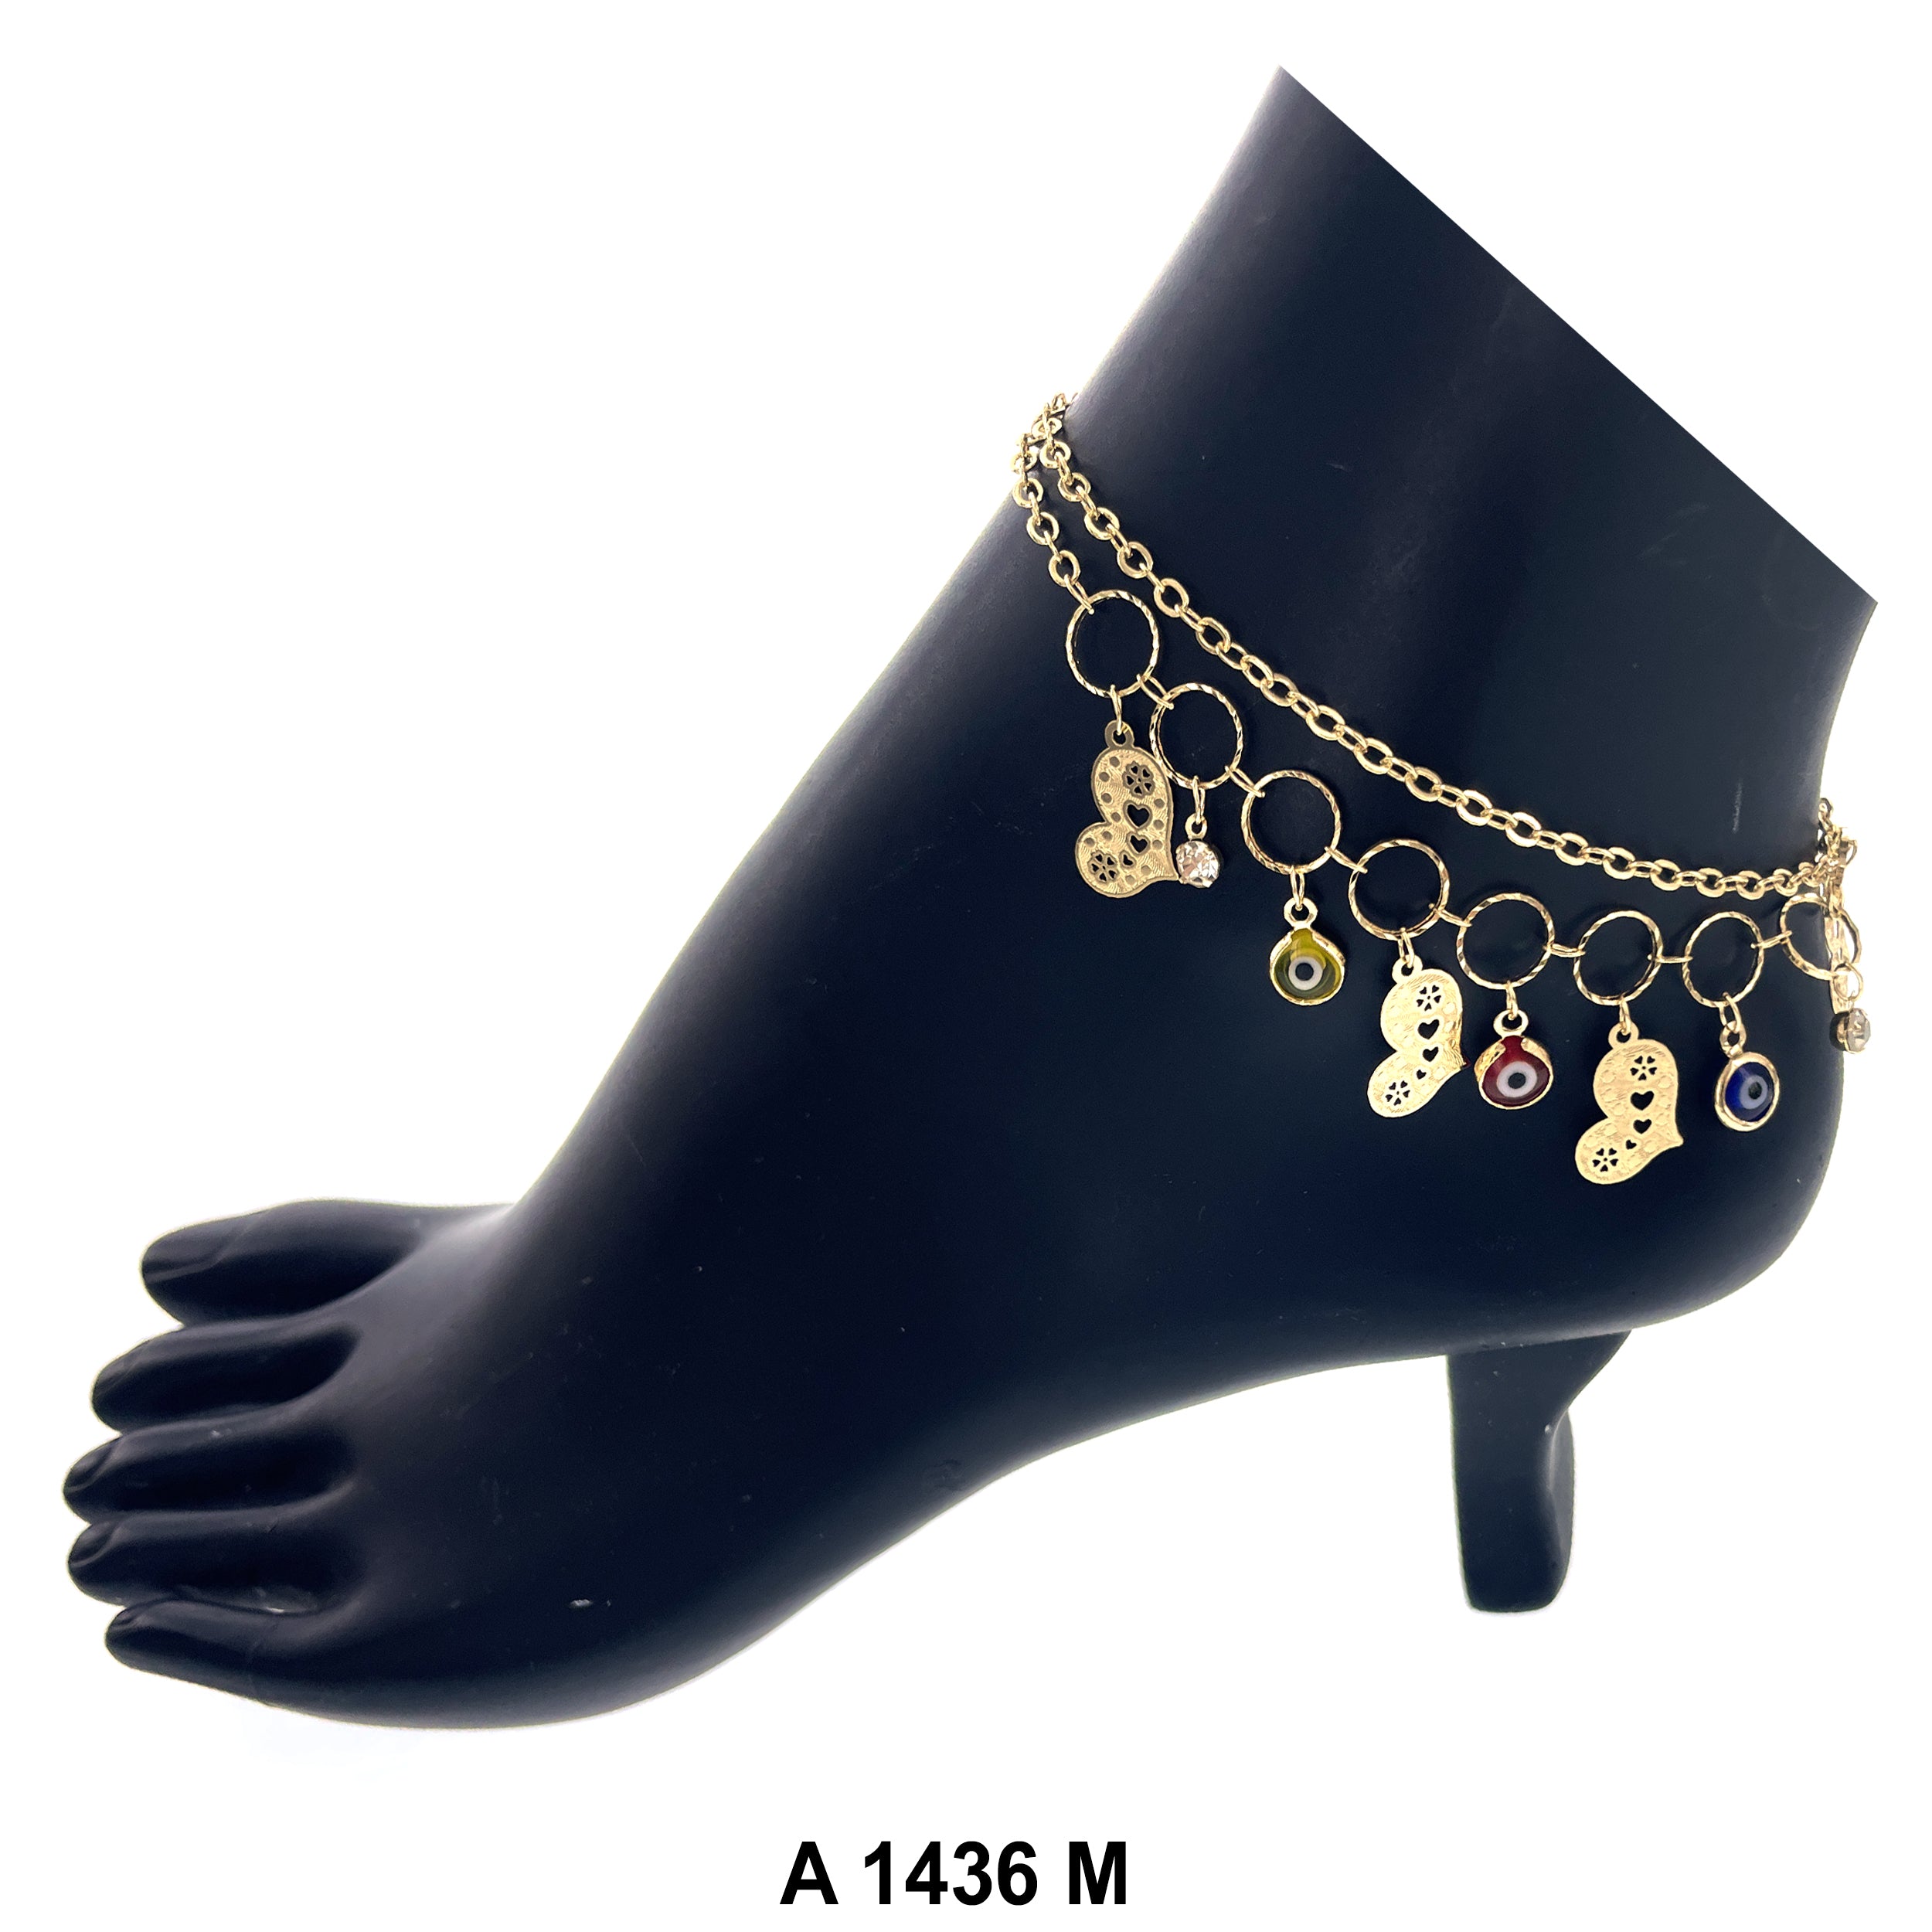 Fashion Anklets A 1436 M